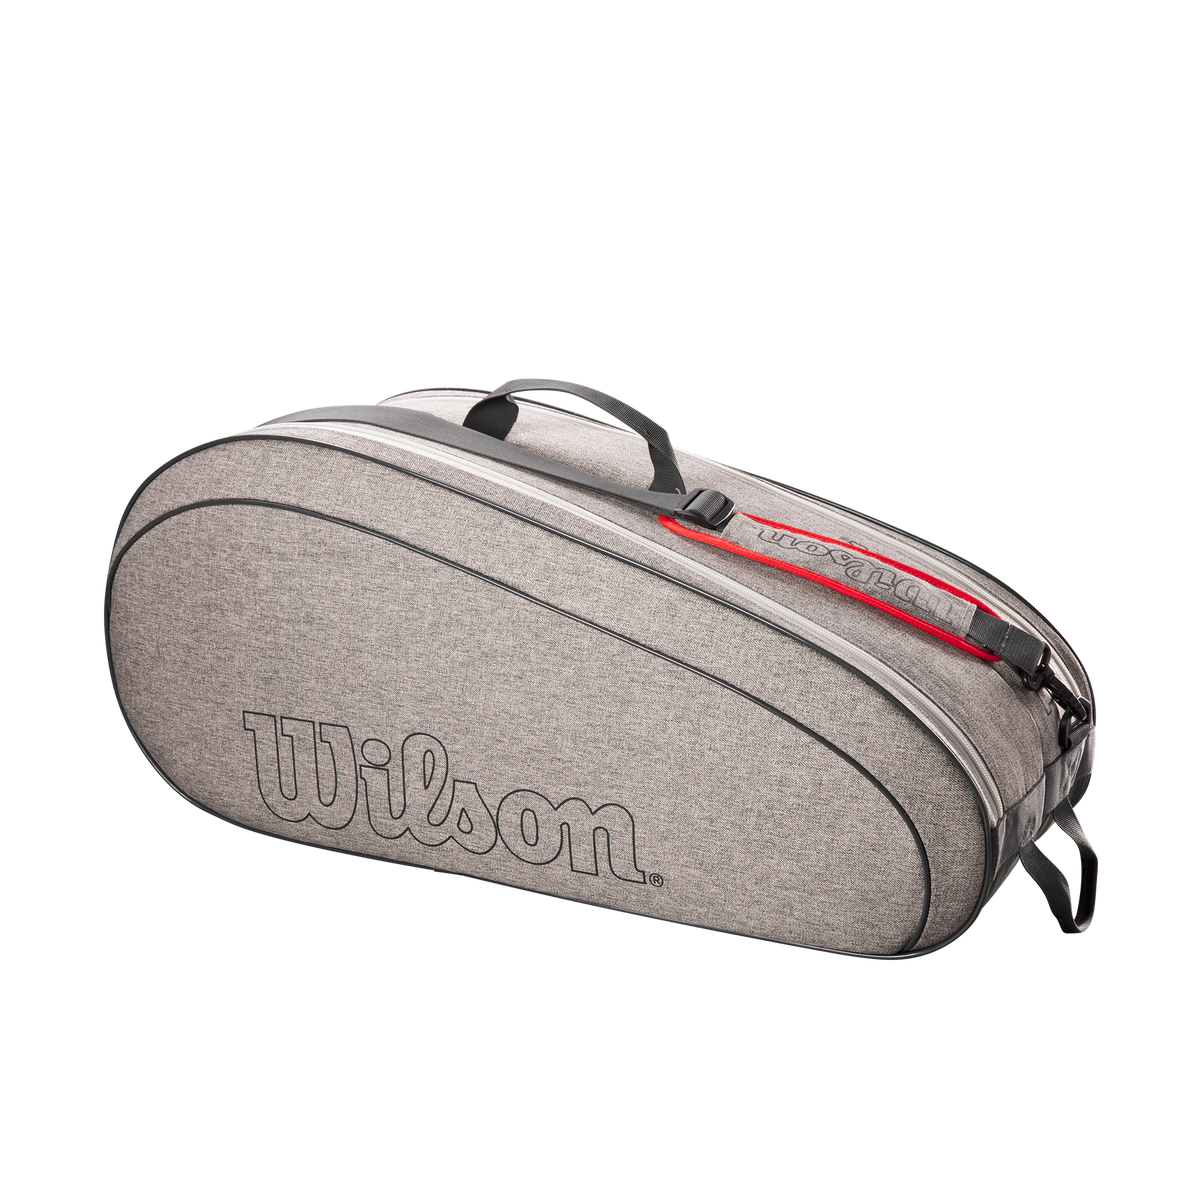 Wilson Team 6-Pack Tennis Rackets Bag